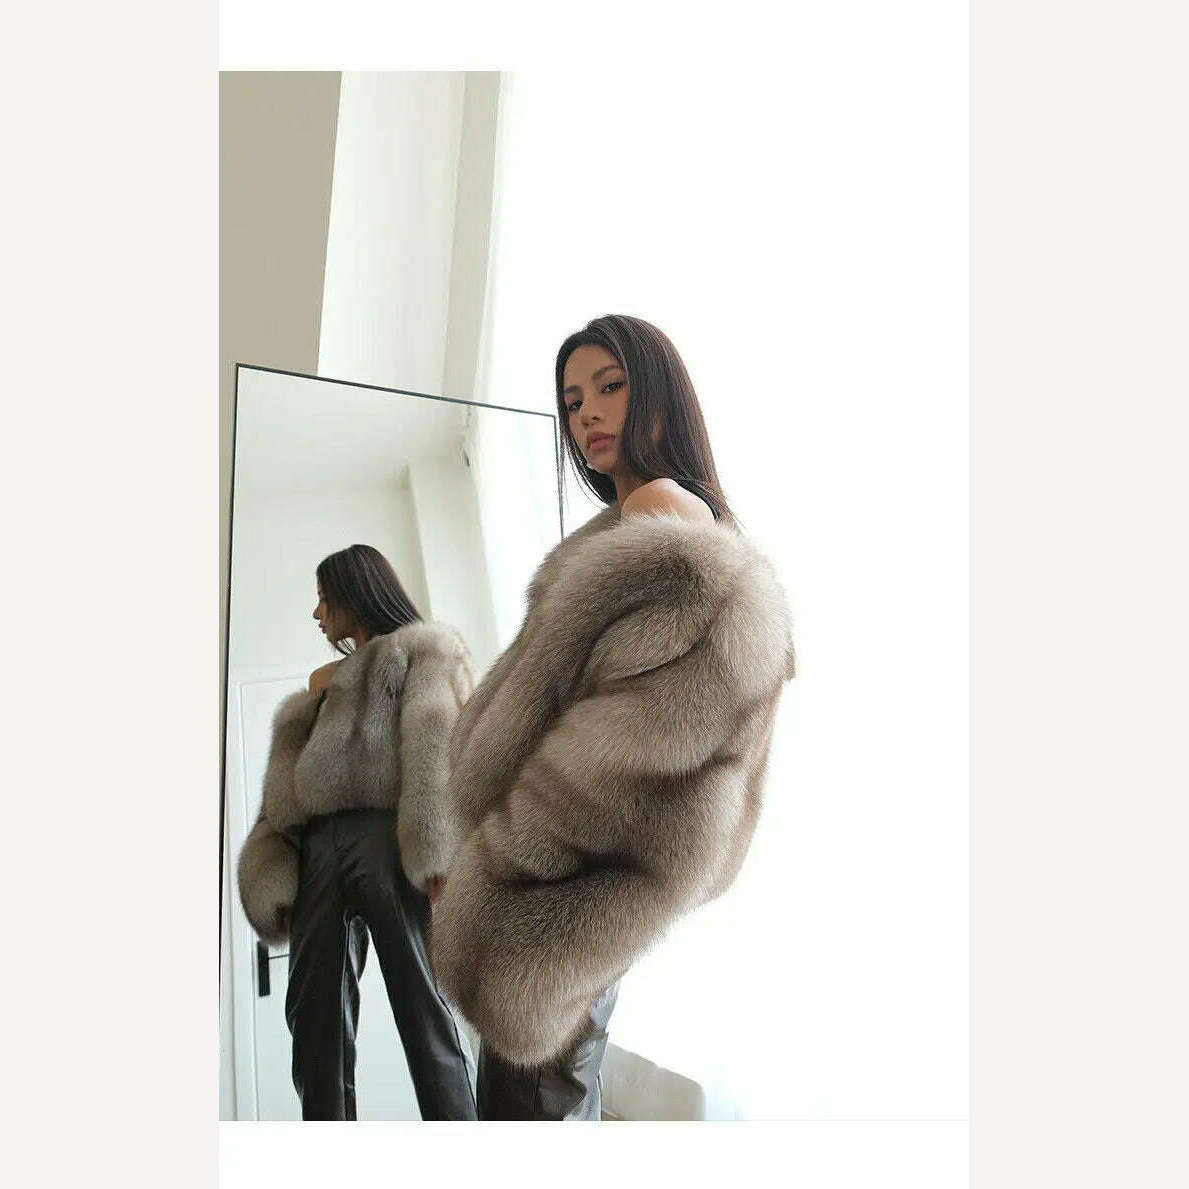 KIMLUD, Coffee Fox Fur Jacket Women Winter Fashion Warm Fluffy Real Fur Outertwear Natural Luxury Fox Fur Coat Lady, KIMLUD Womens Clothes